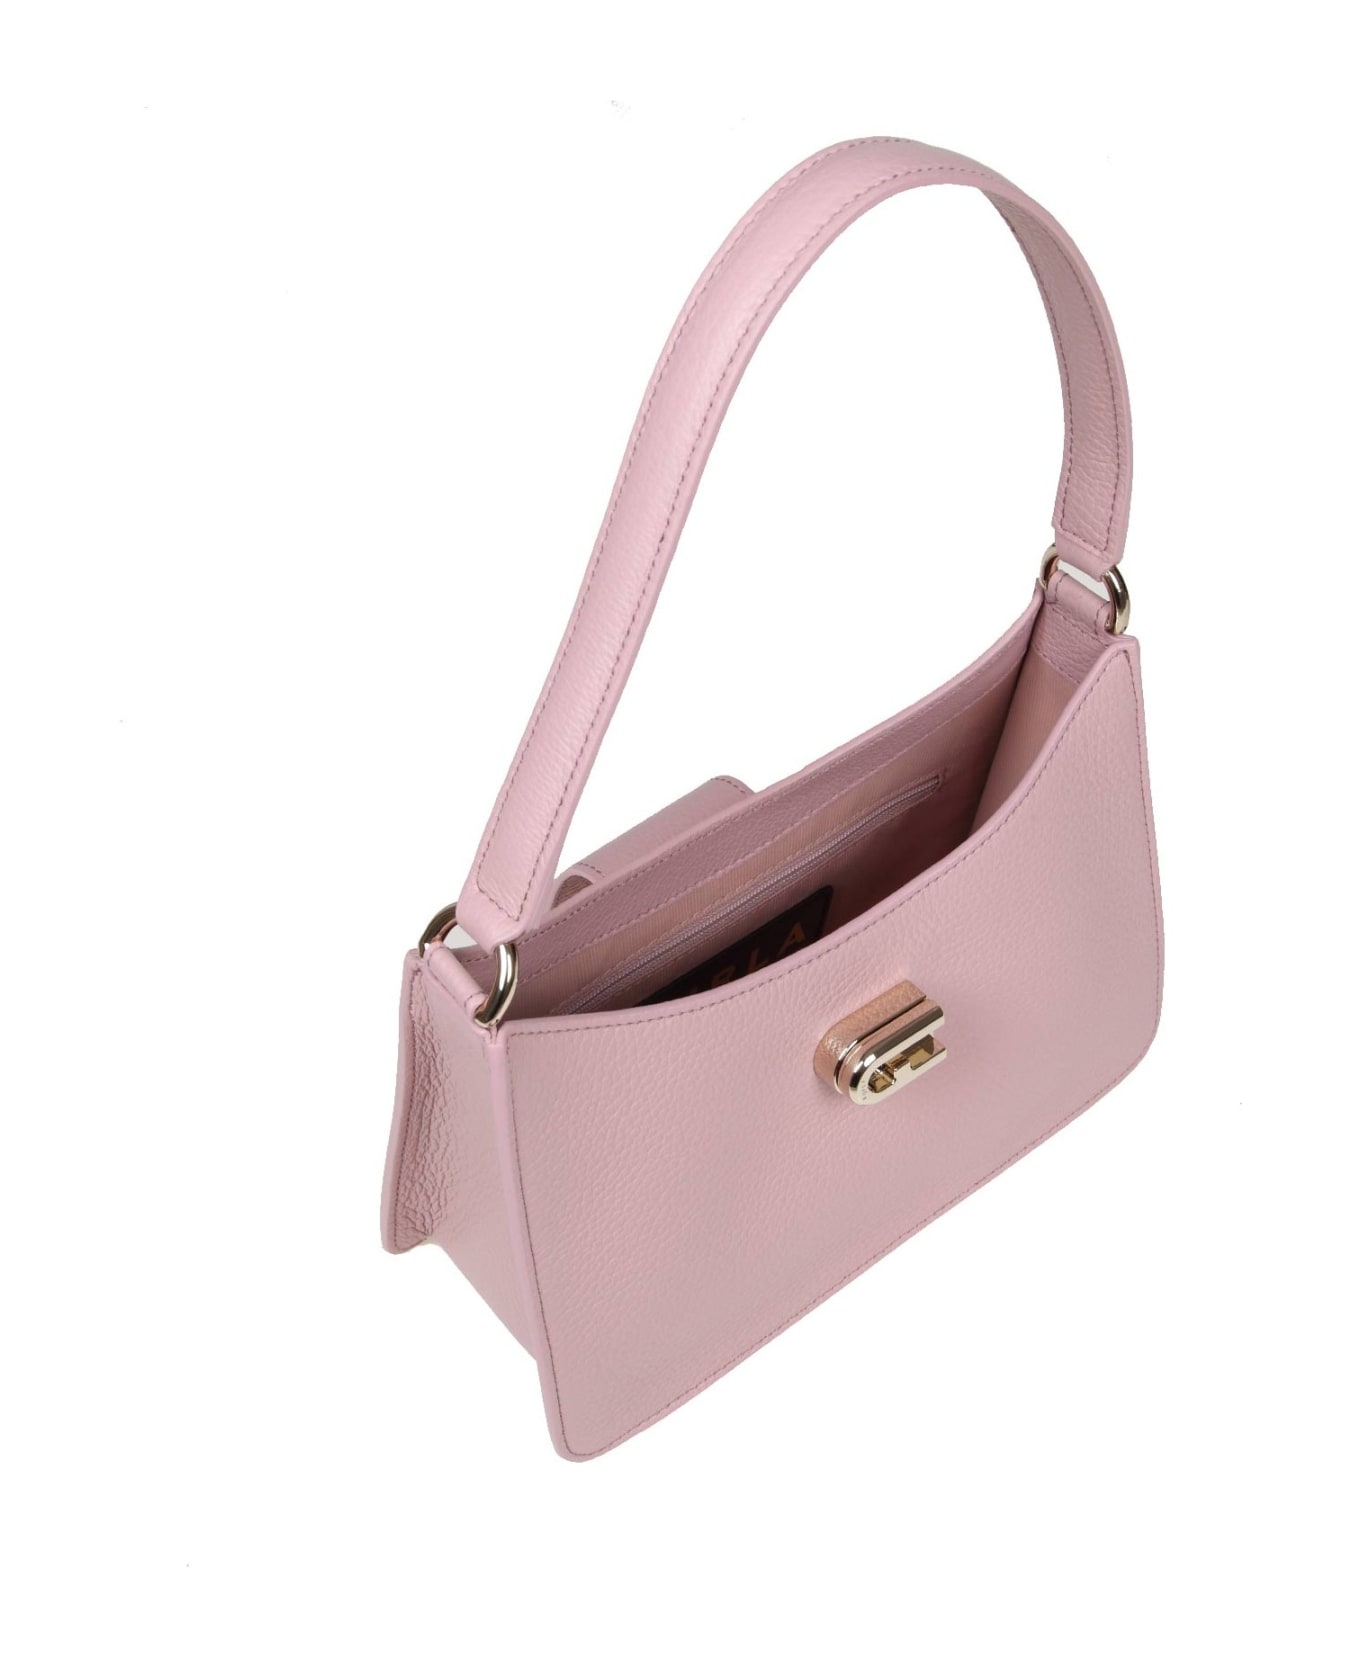 Furla 1927 S Shoulder Bag In Pink Soft Leather - Alba ショルダーバッグ